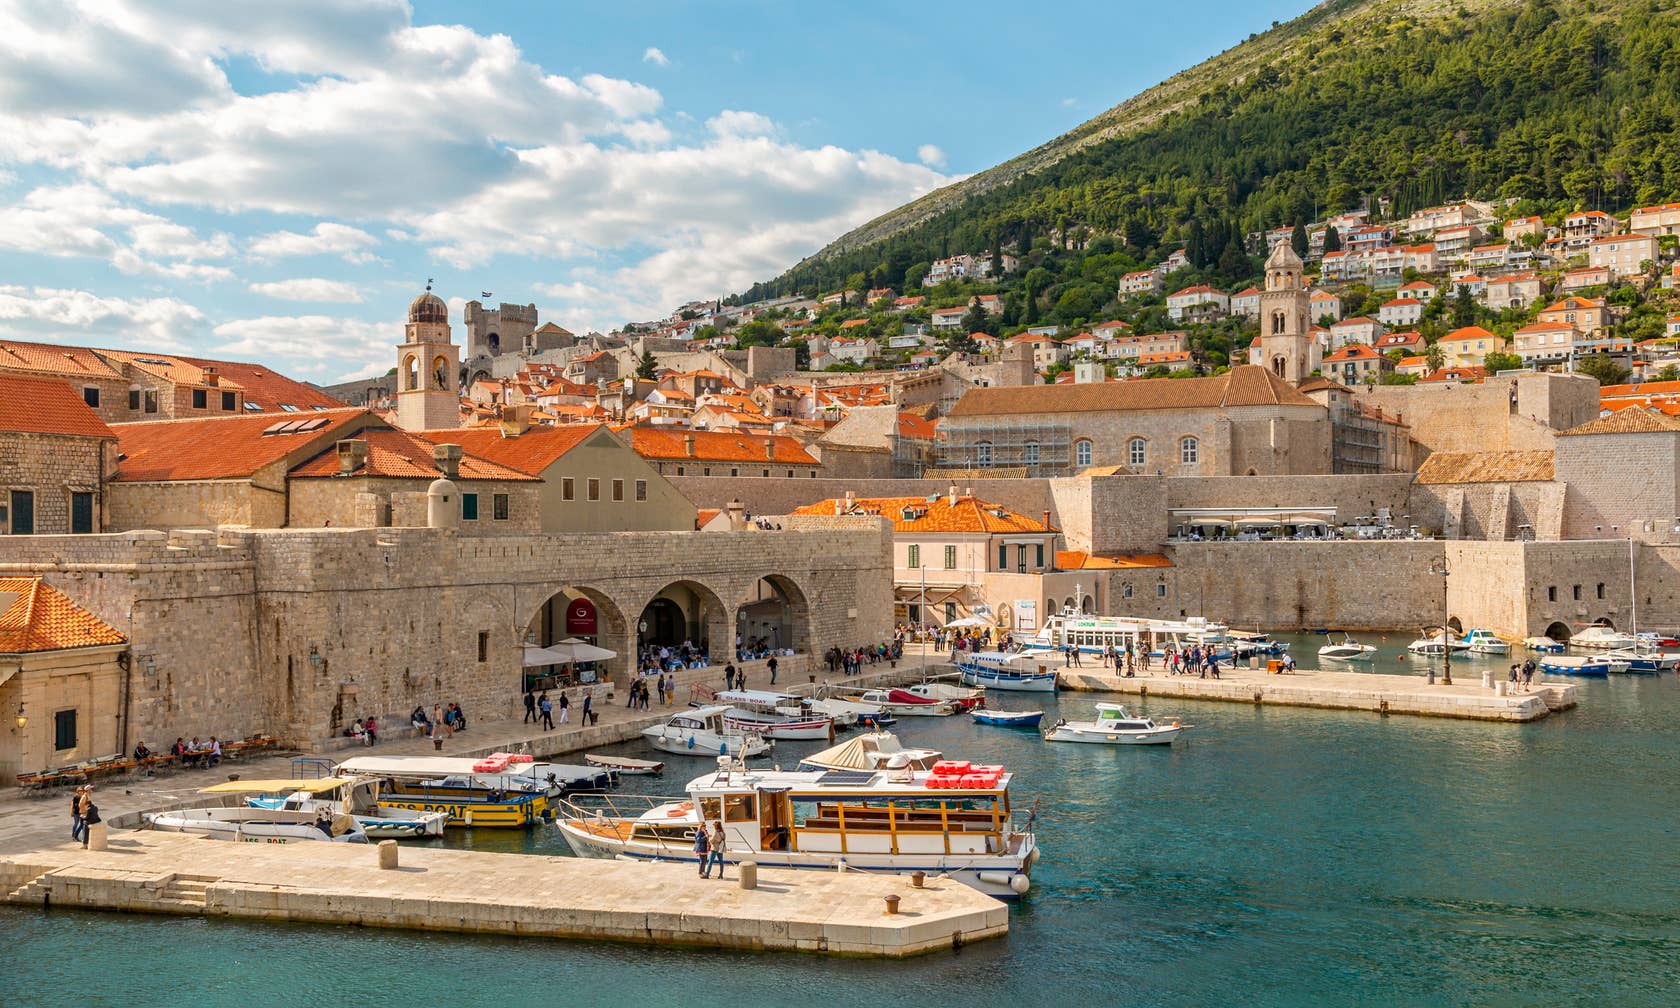 Bérbeadó nyaralók itt: Dubrovnik